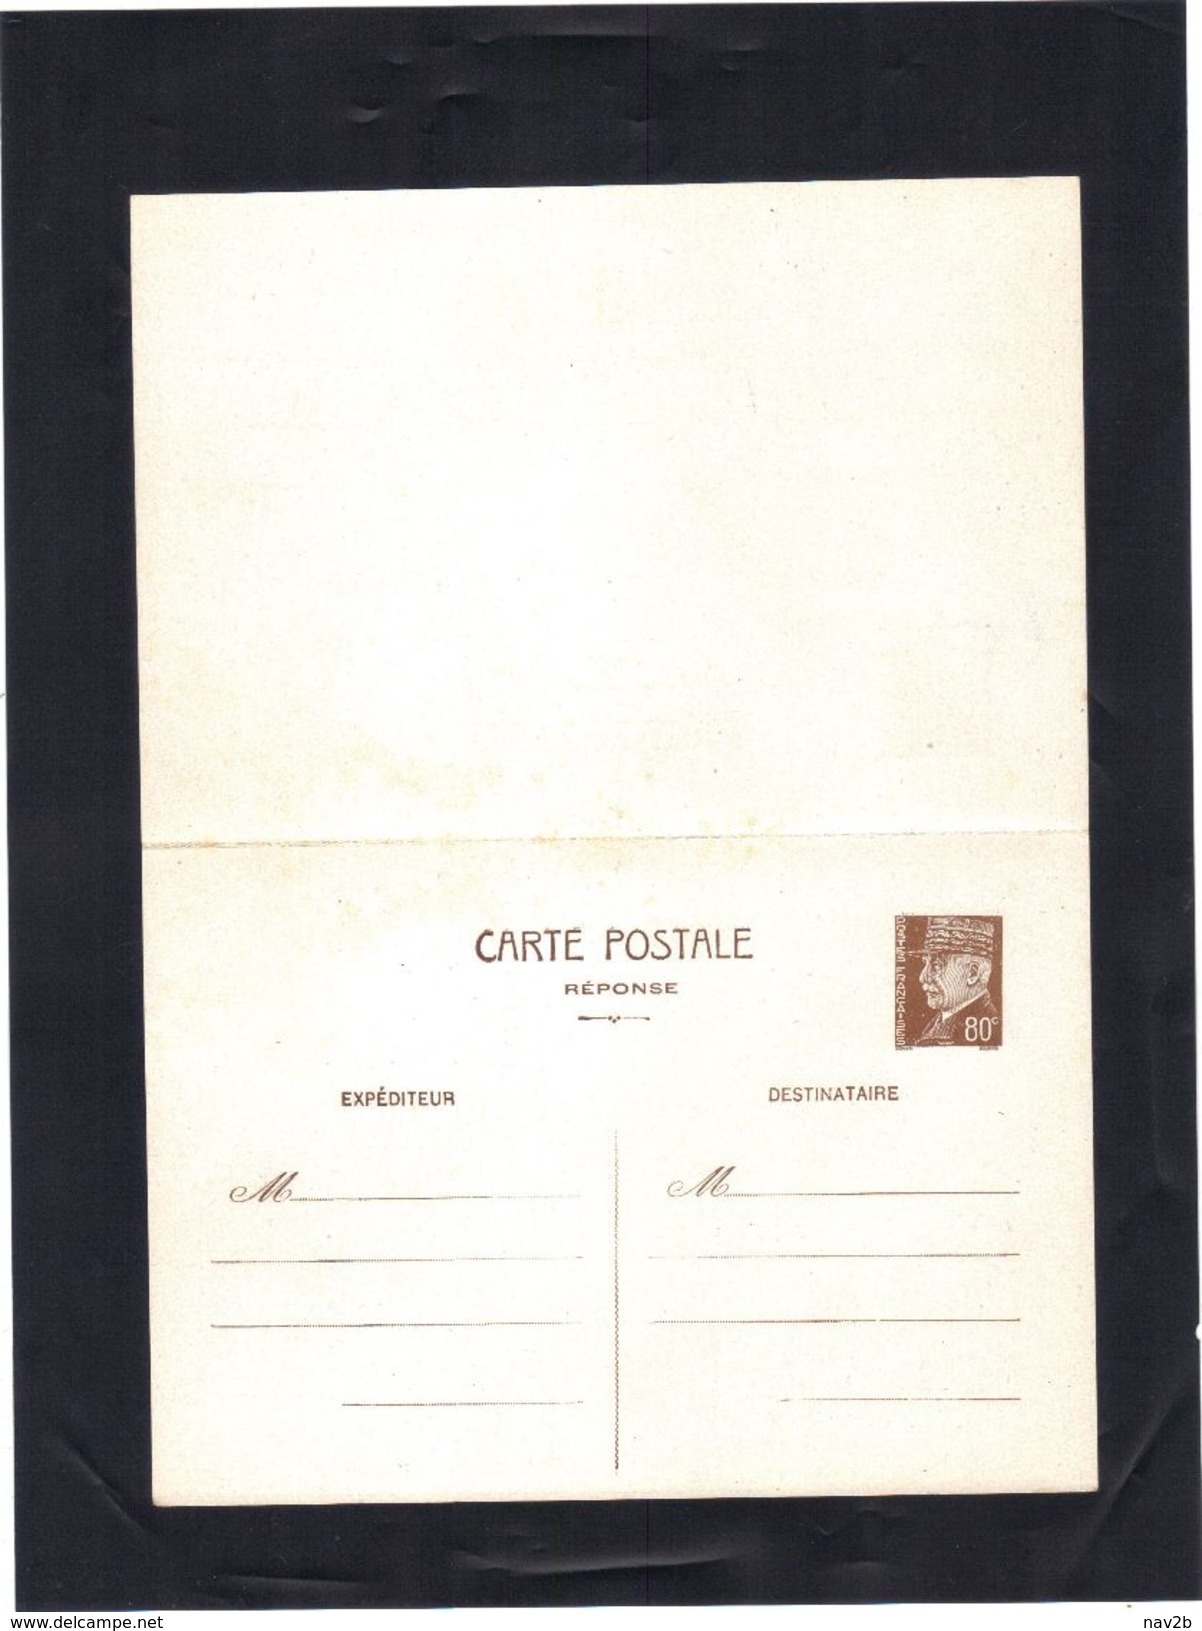 Entier Carte Postale Pétain 80 Cts .  REPONSE  PAYEE .  Neuve . - Postales Tipos Y (antes De 1995)